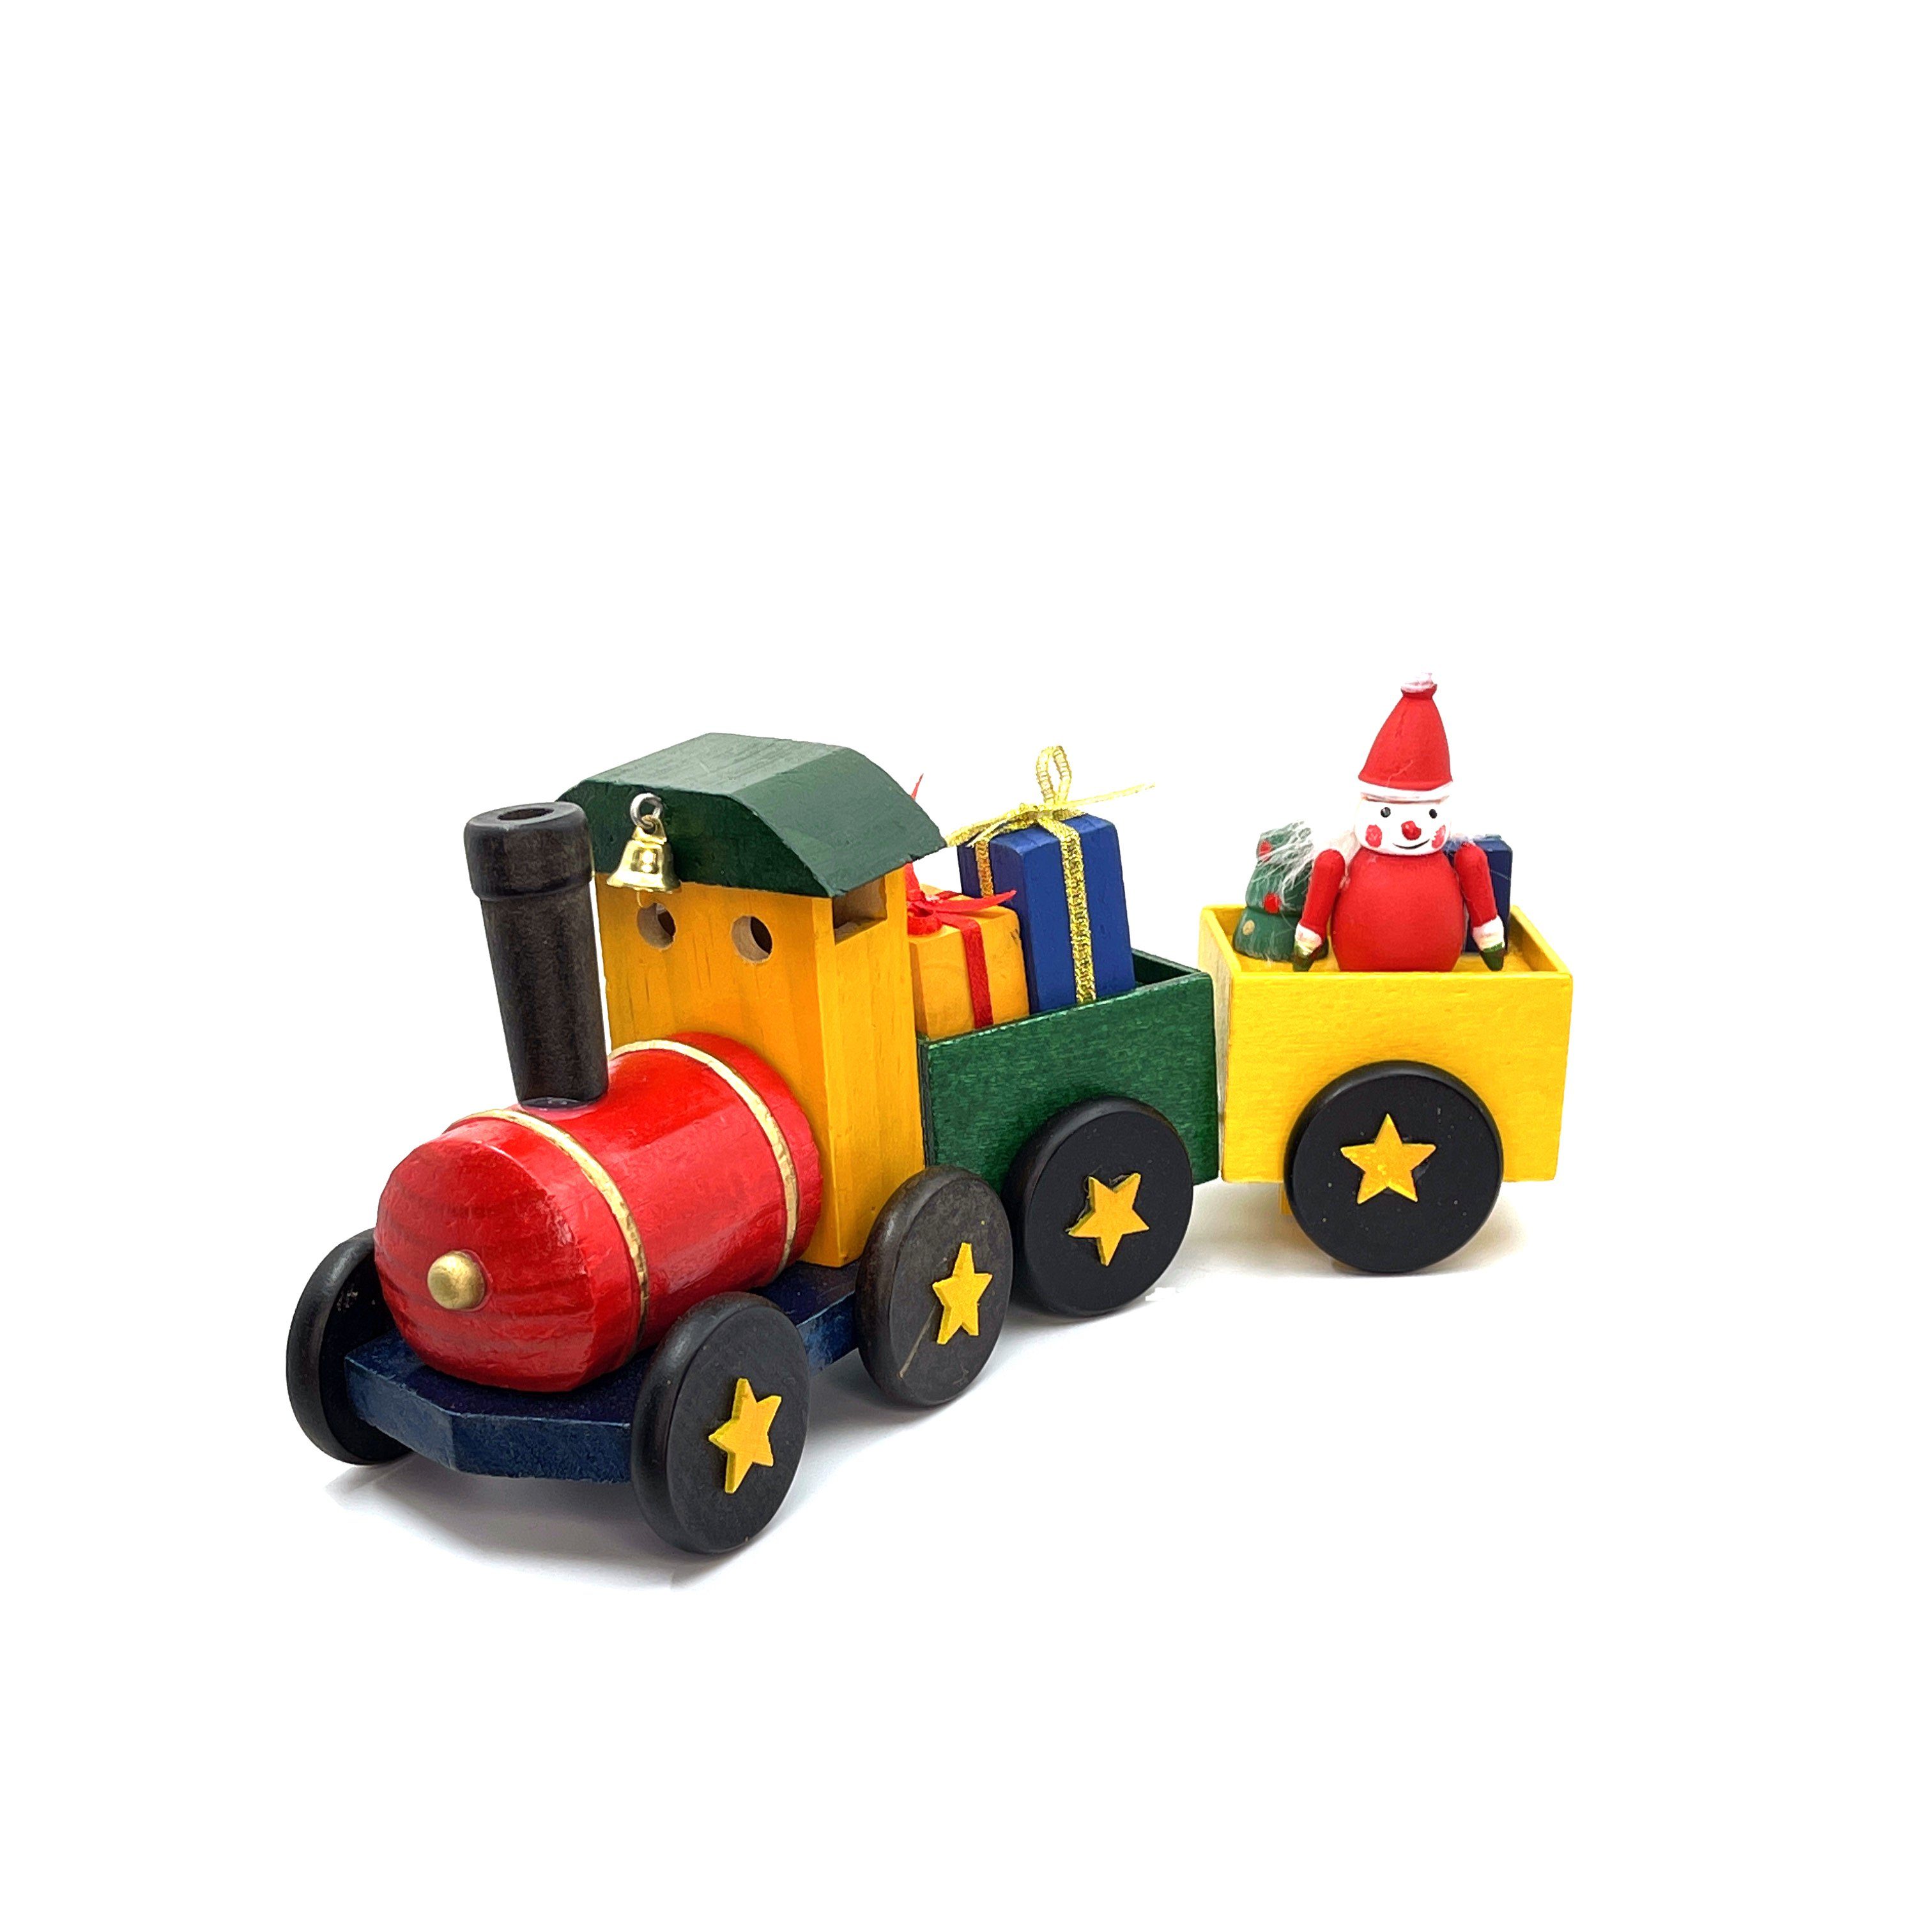 Weihnachtsmann, Räucherfigur Maße Kaladia Bunt Lokomotive 90110-10, ca. Räuchermännchen - 24x7,5x11cm